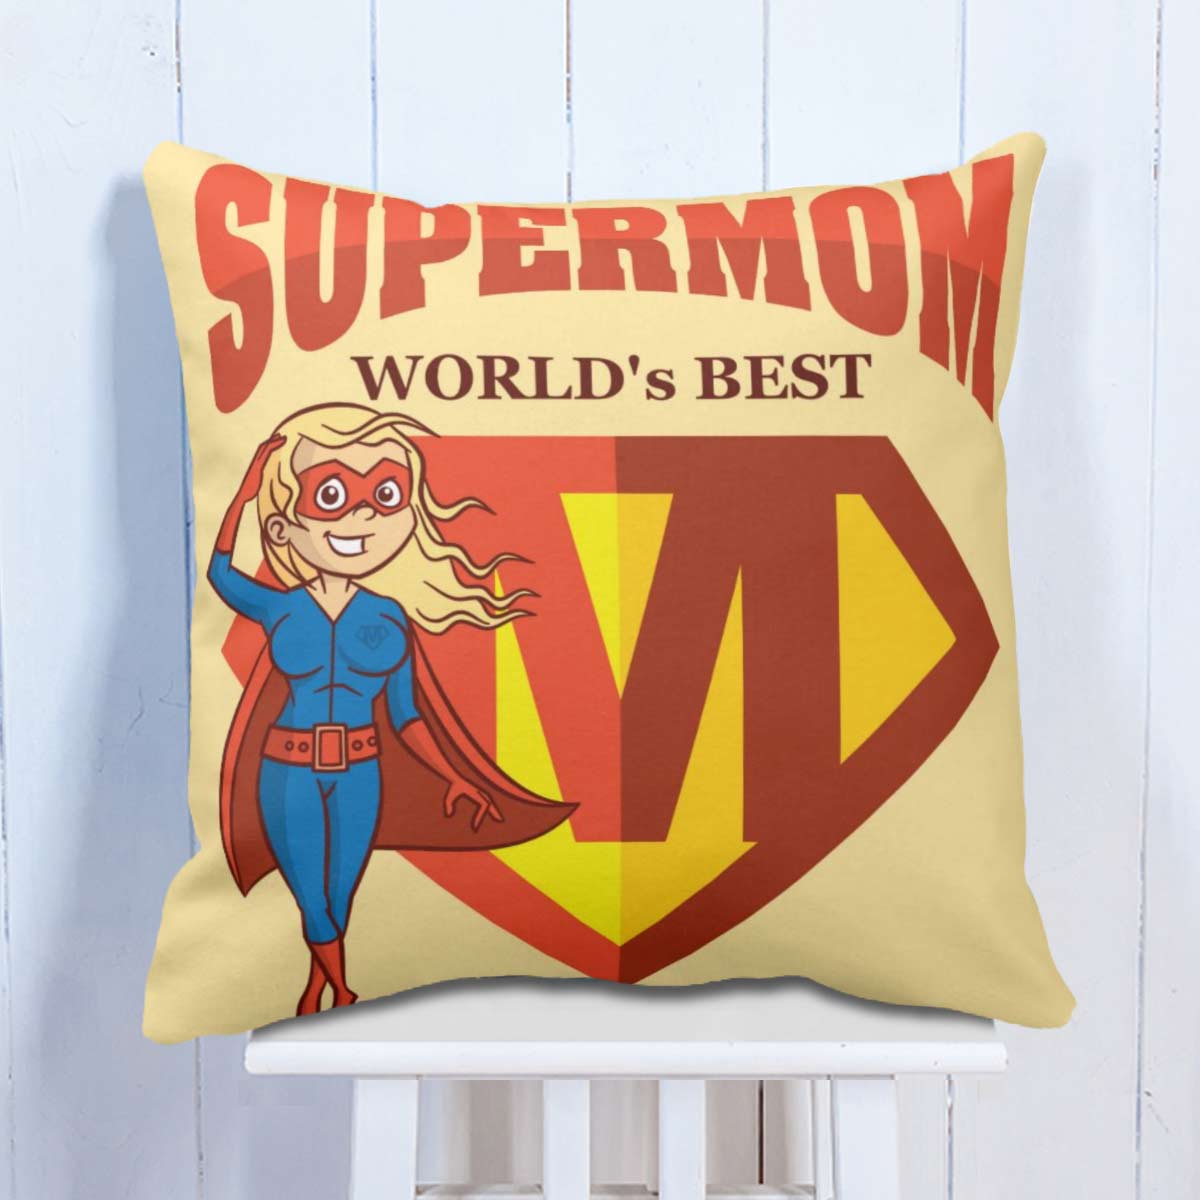 World's Best SuperMom Cushion